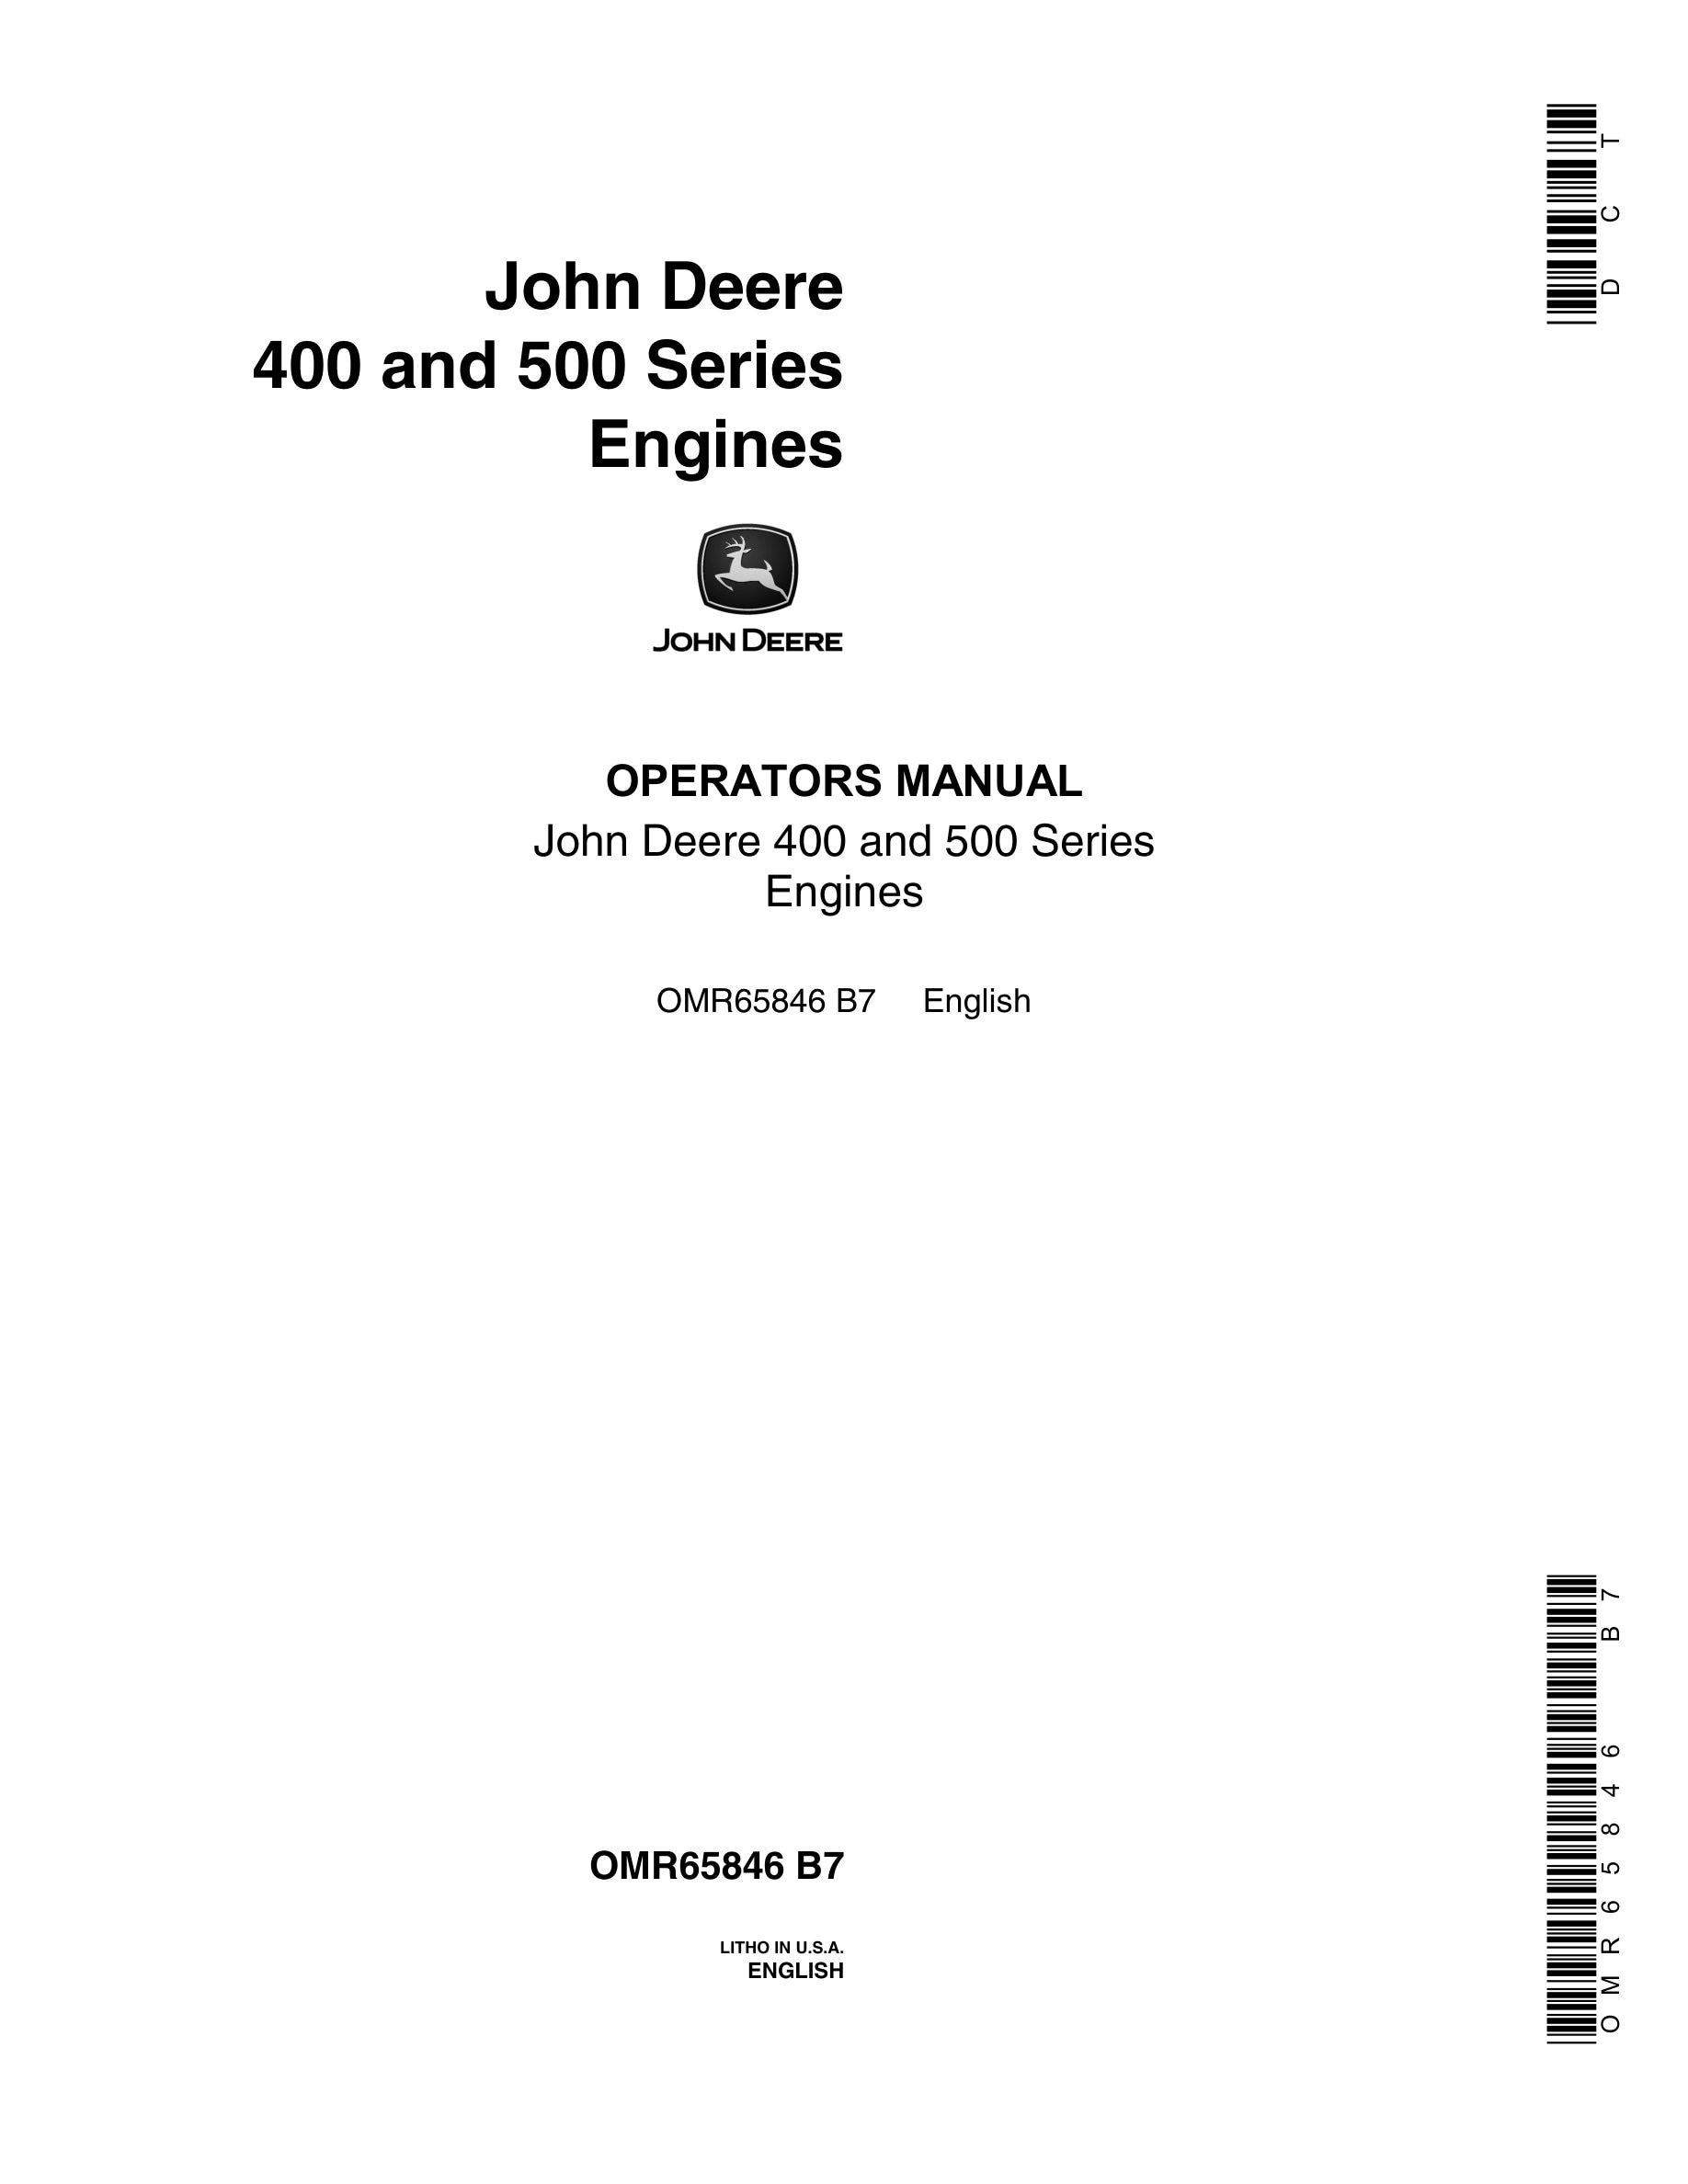 John Deere PowerTech 400 and 500 Series Engines Operator Manual OMR65846-1